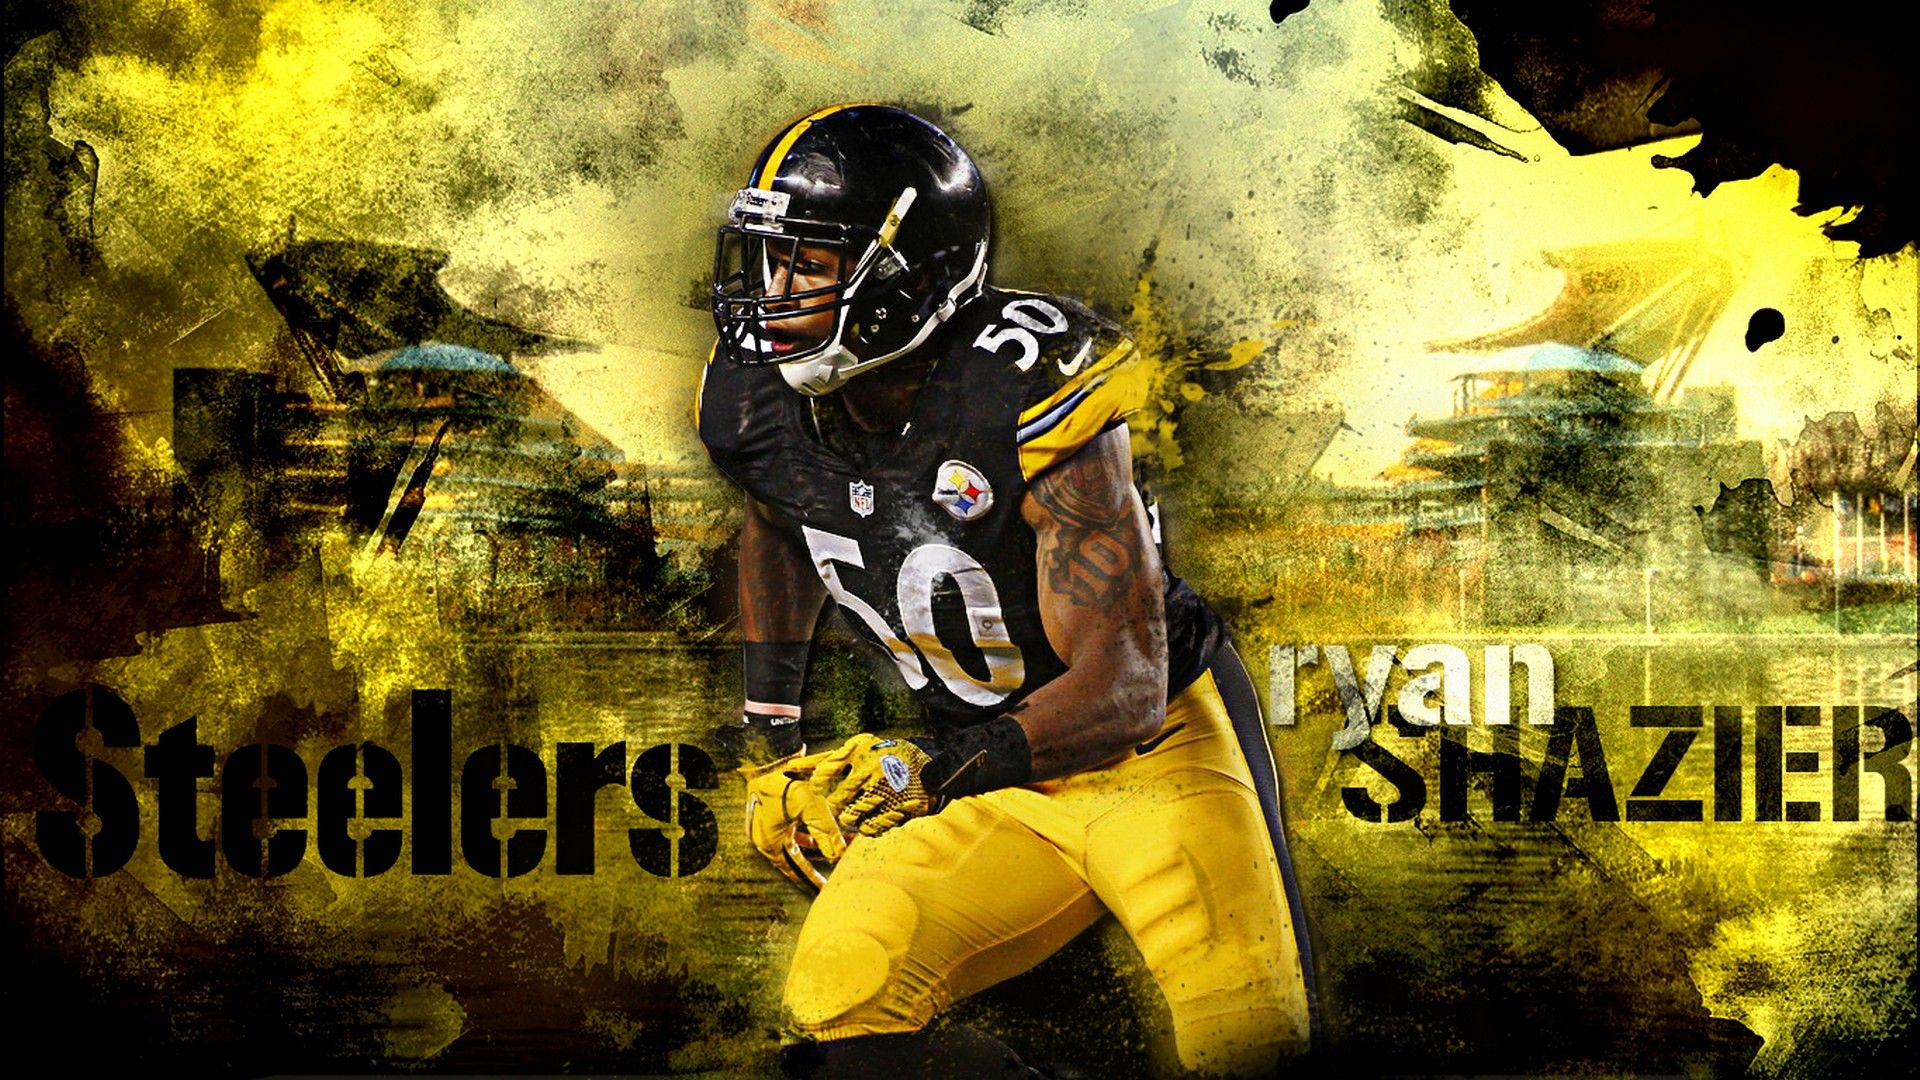 HD Desktop Wallpaper Steelers NFL Football Wallpaper. Steelers, Sports wallpaper, Pittsburgh sports